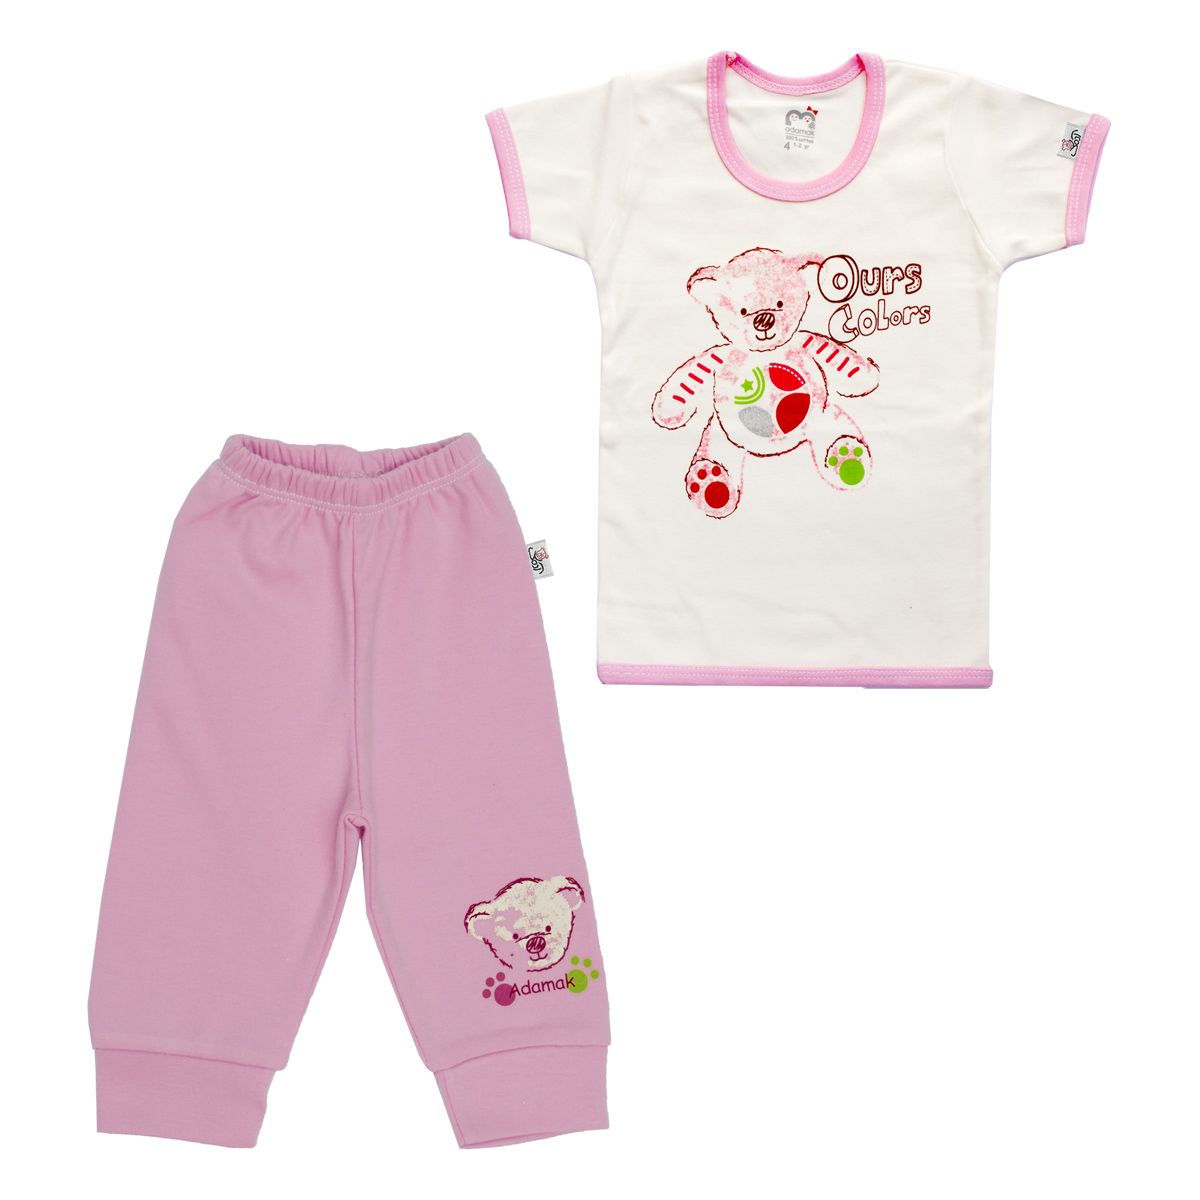 ست تی شرت و شلوار نوزادی آدمک طرح تدی کد 153132-2 -  - 1